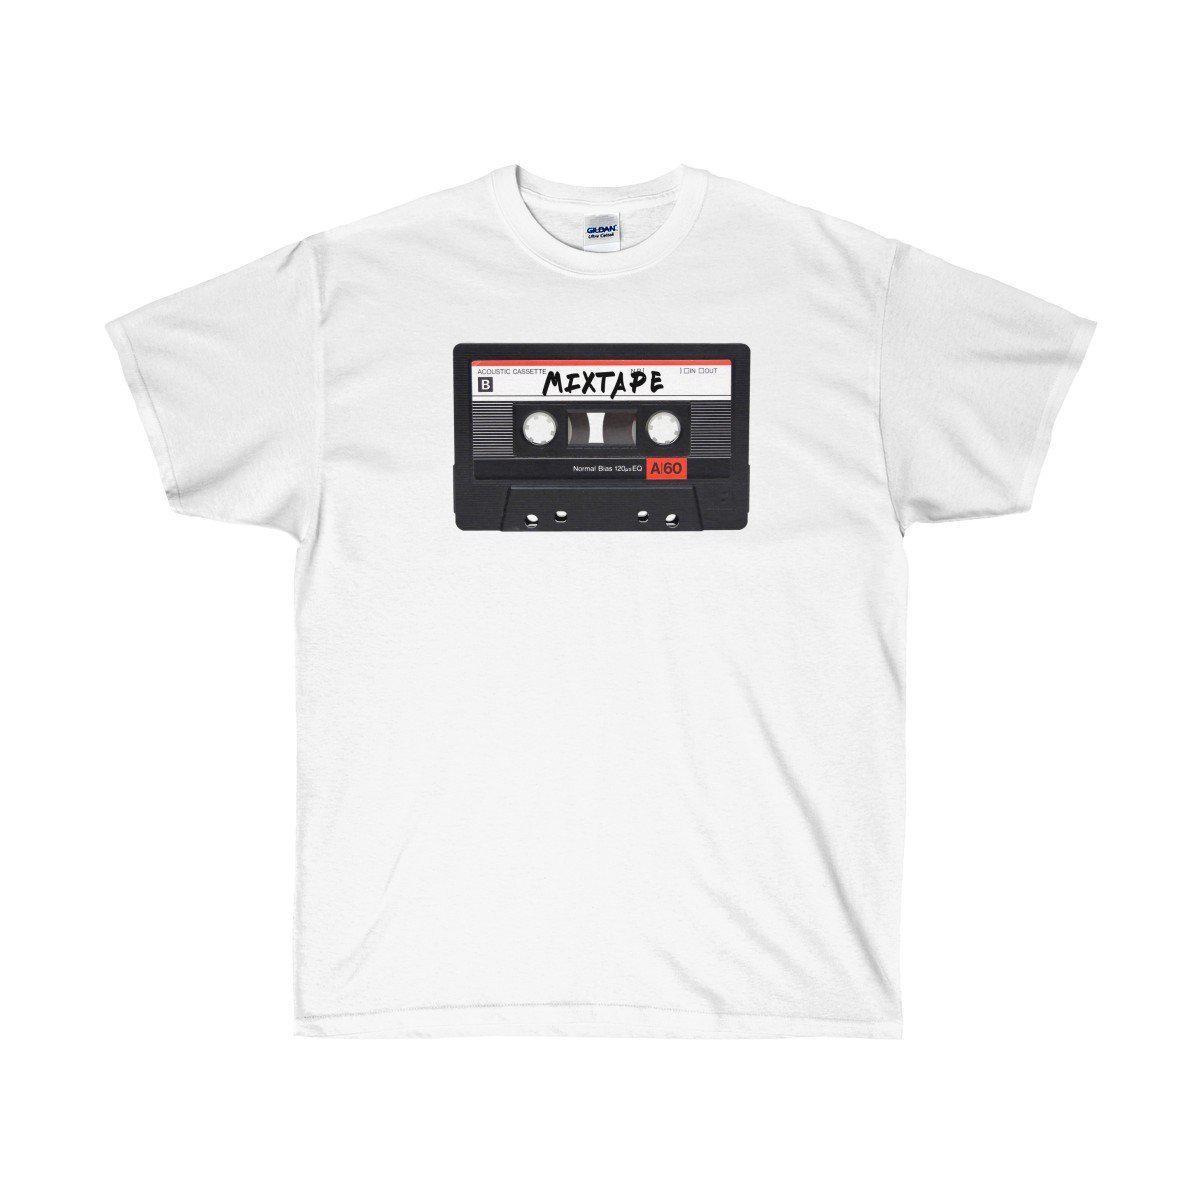 Mixtape Ultra Cotton Tee Shirt - 90's Retro Hip Hop tee-White-S-Archethype